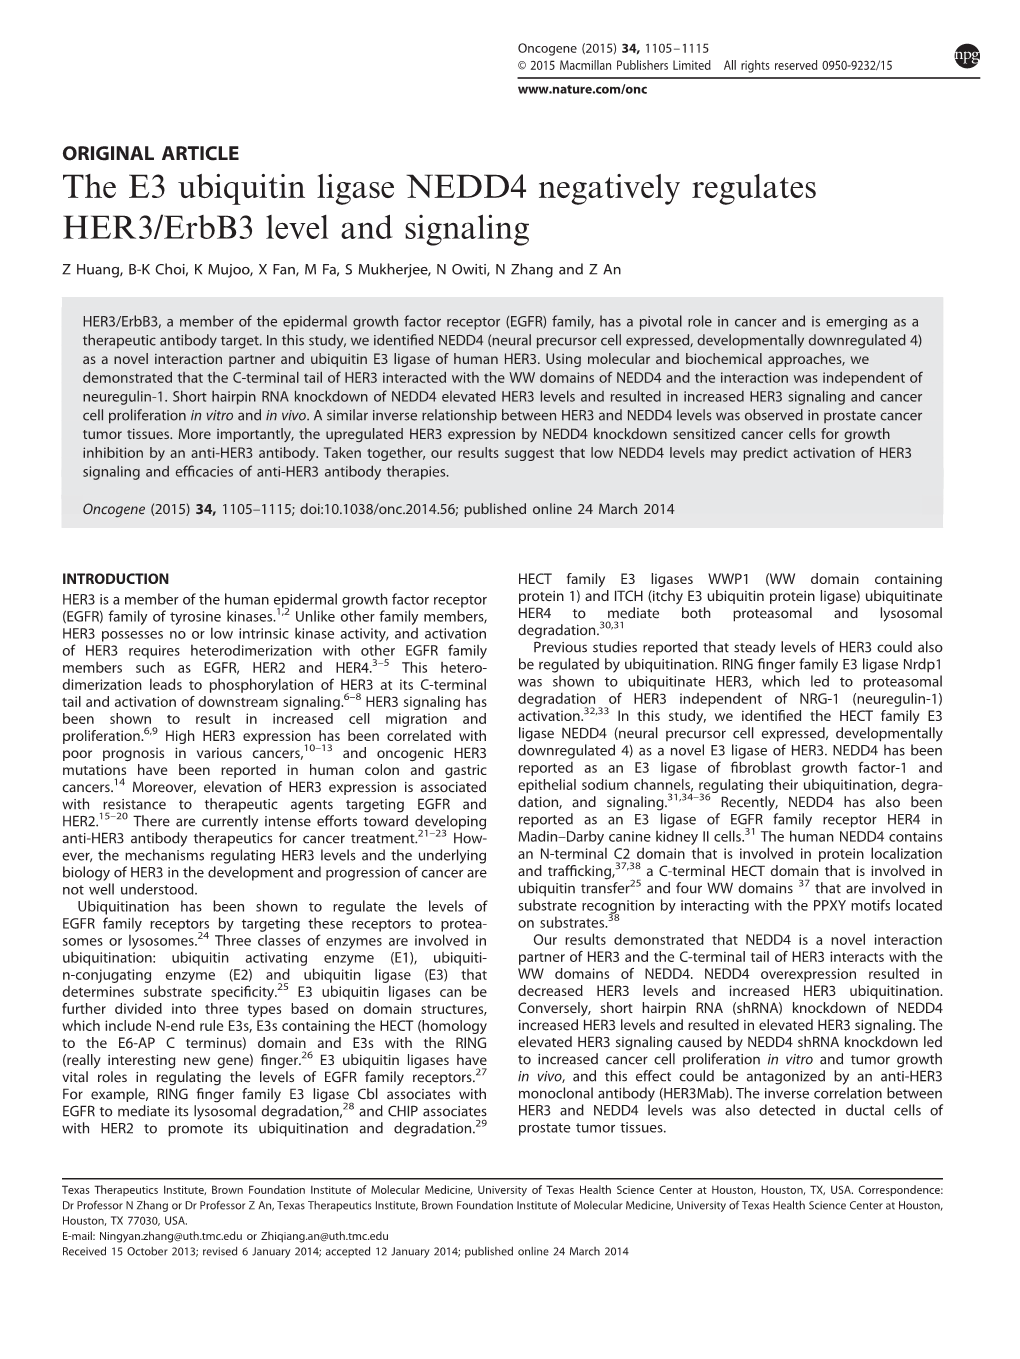 The E3 Ubiquitin Ligase NEDD4 Negatively Regulates HER3/Erbb3 Level and Signaling